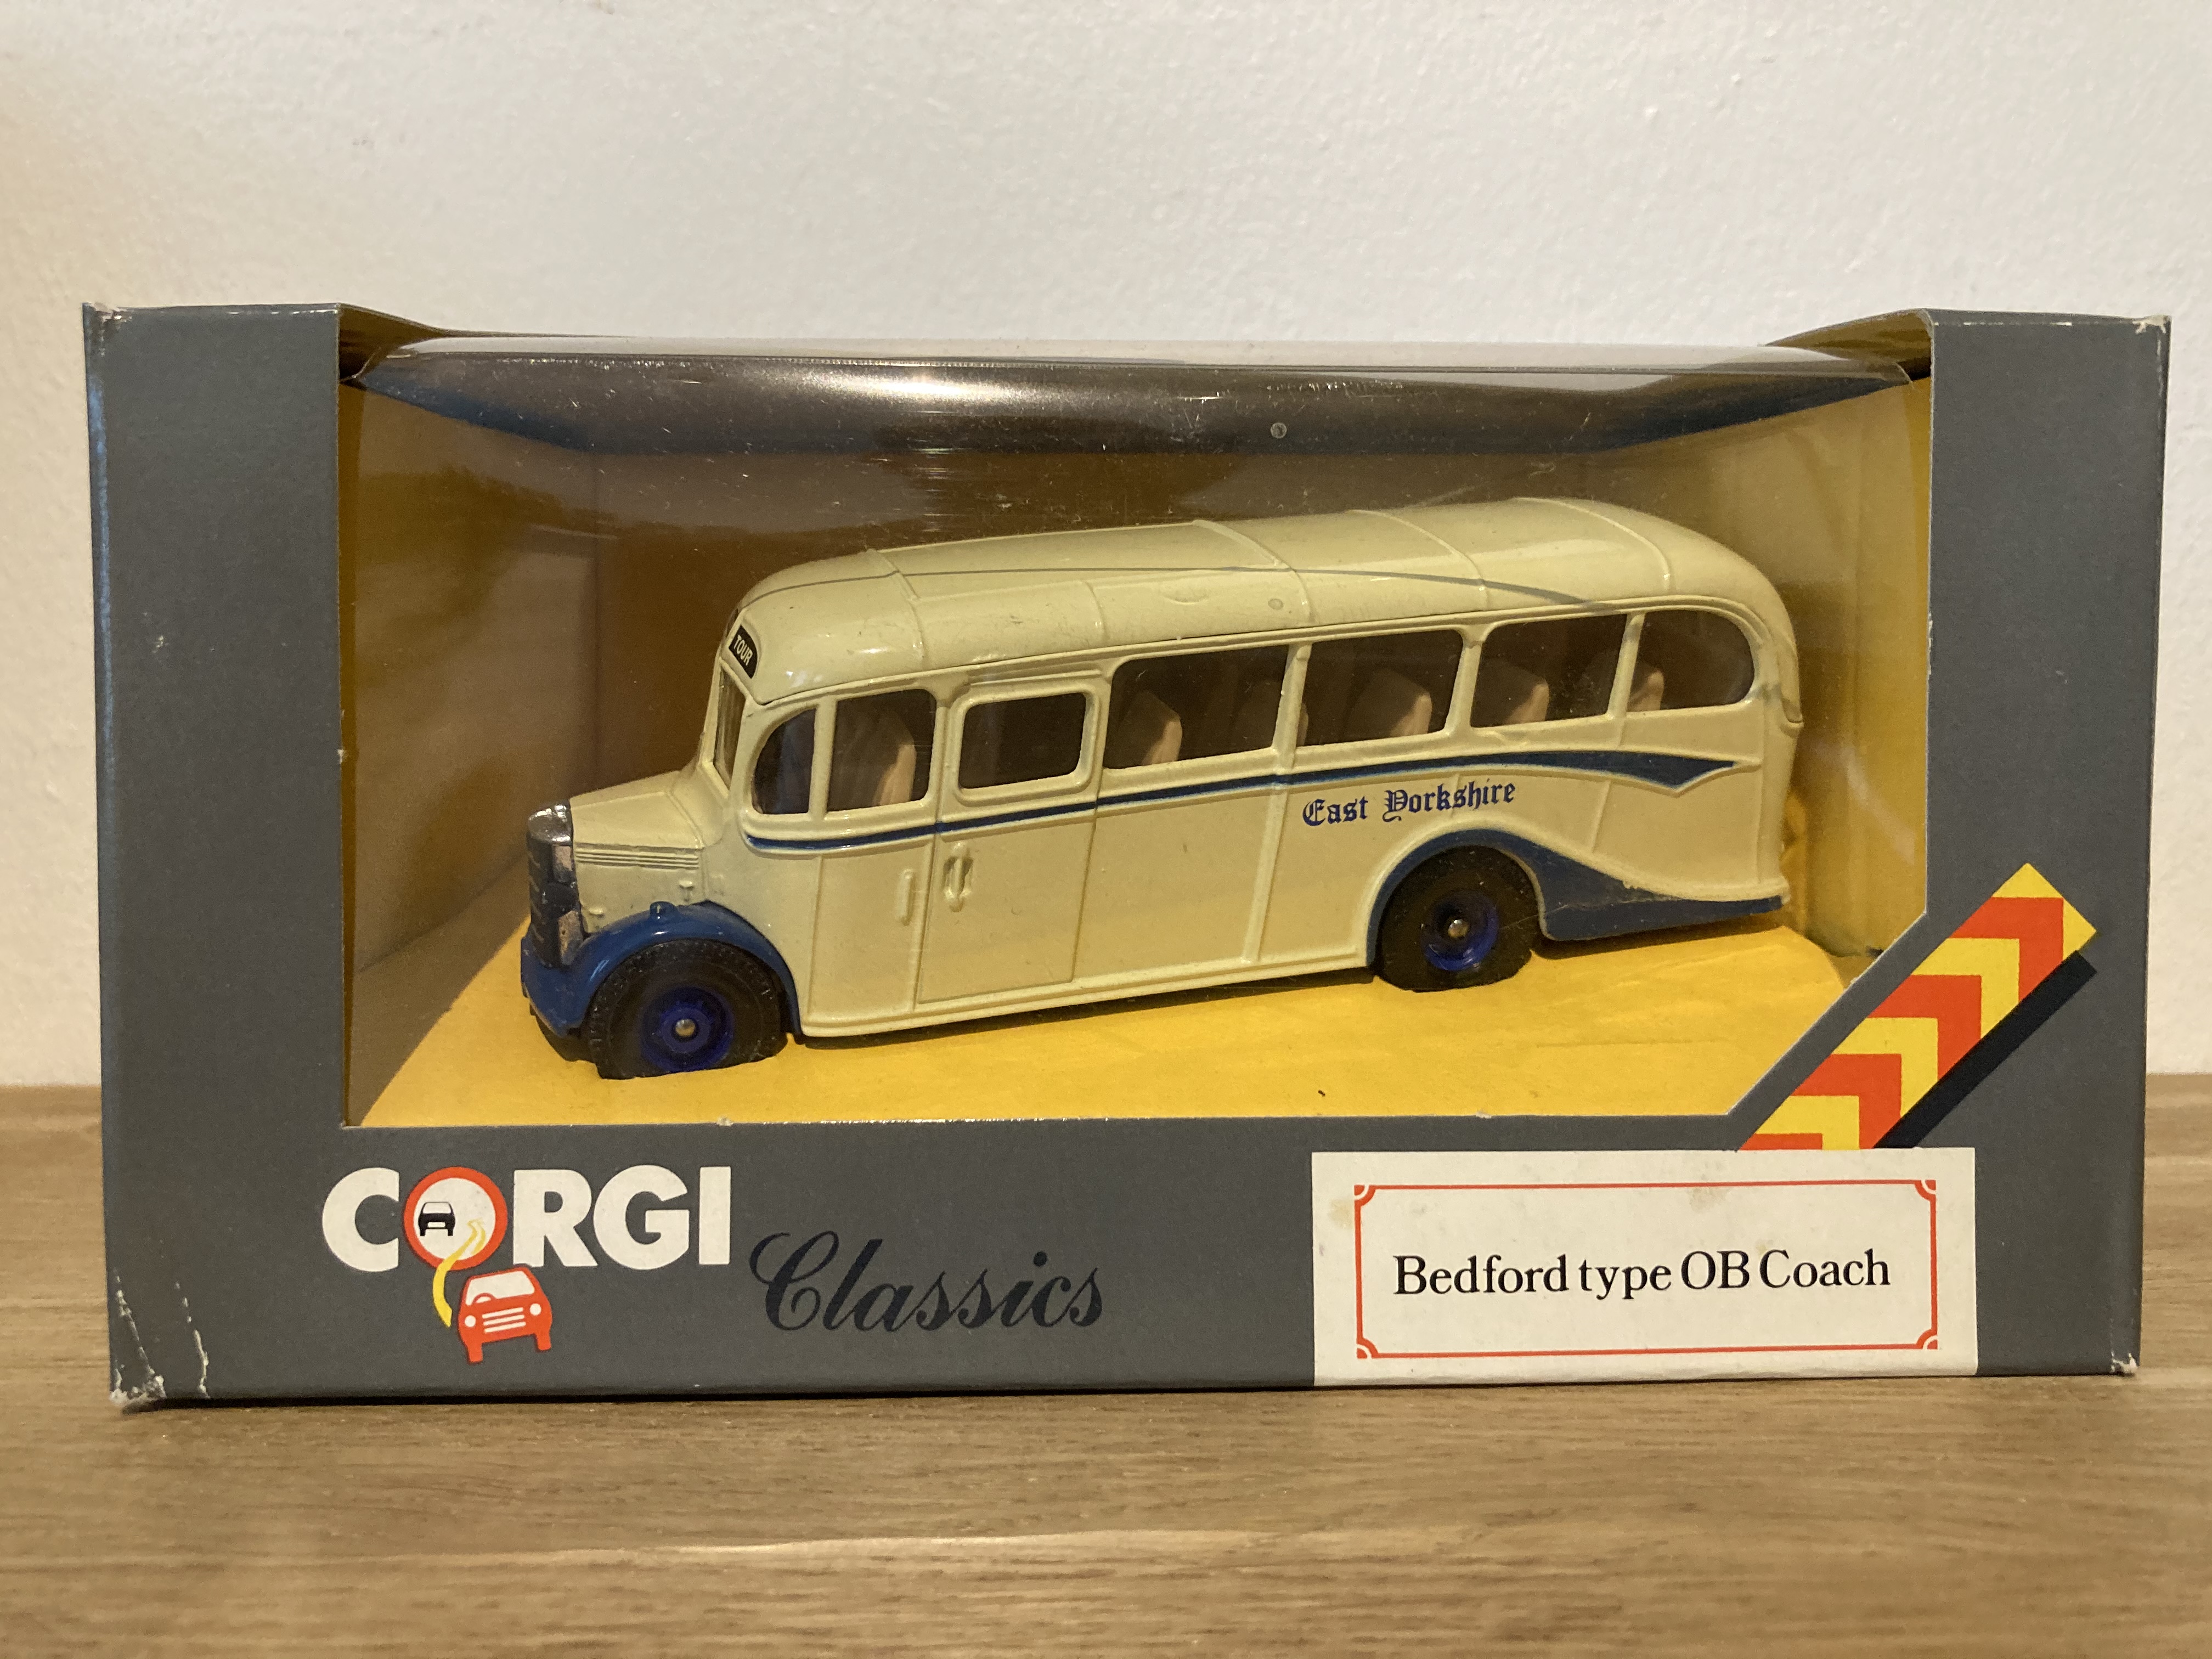 Corgi Classics East Yorkshire Bedford Type OB Coach - Image 2 of 3